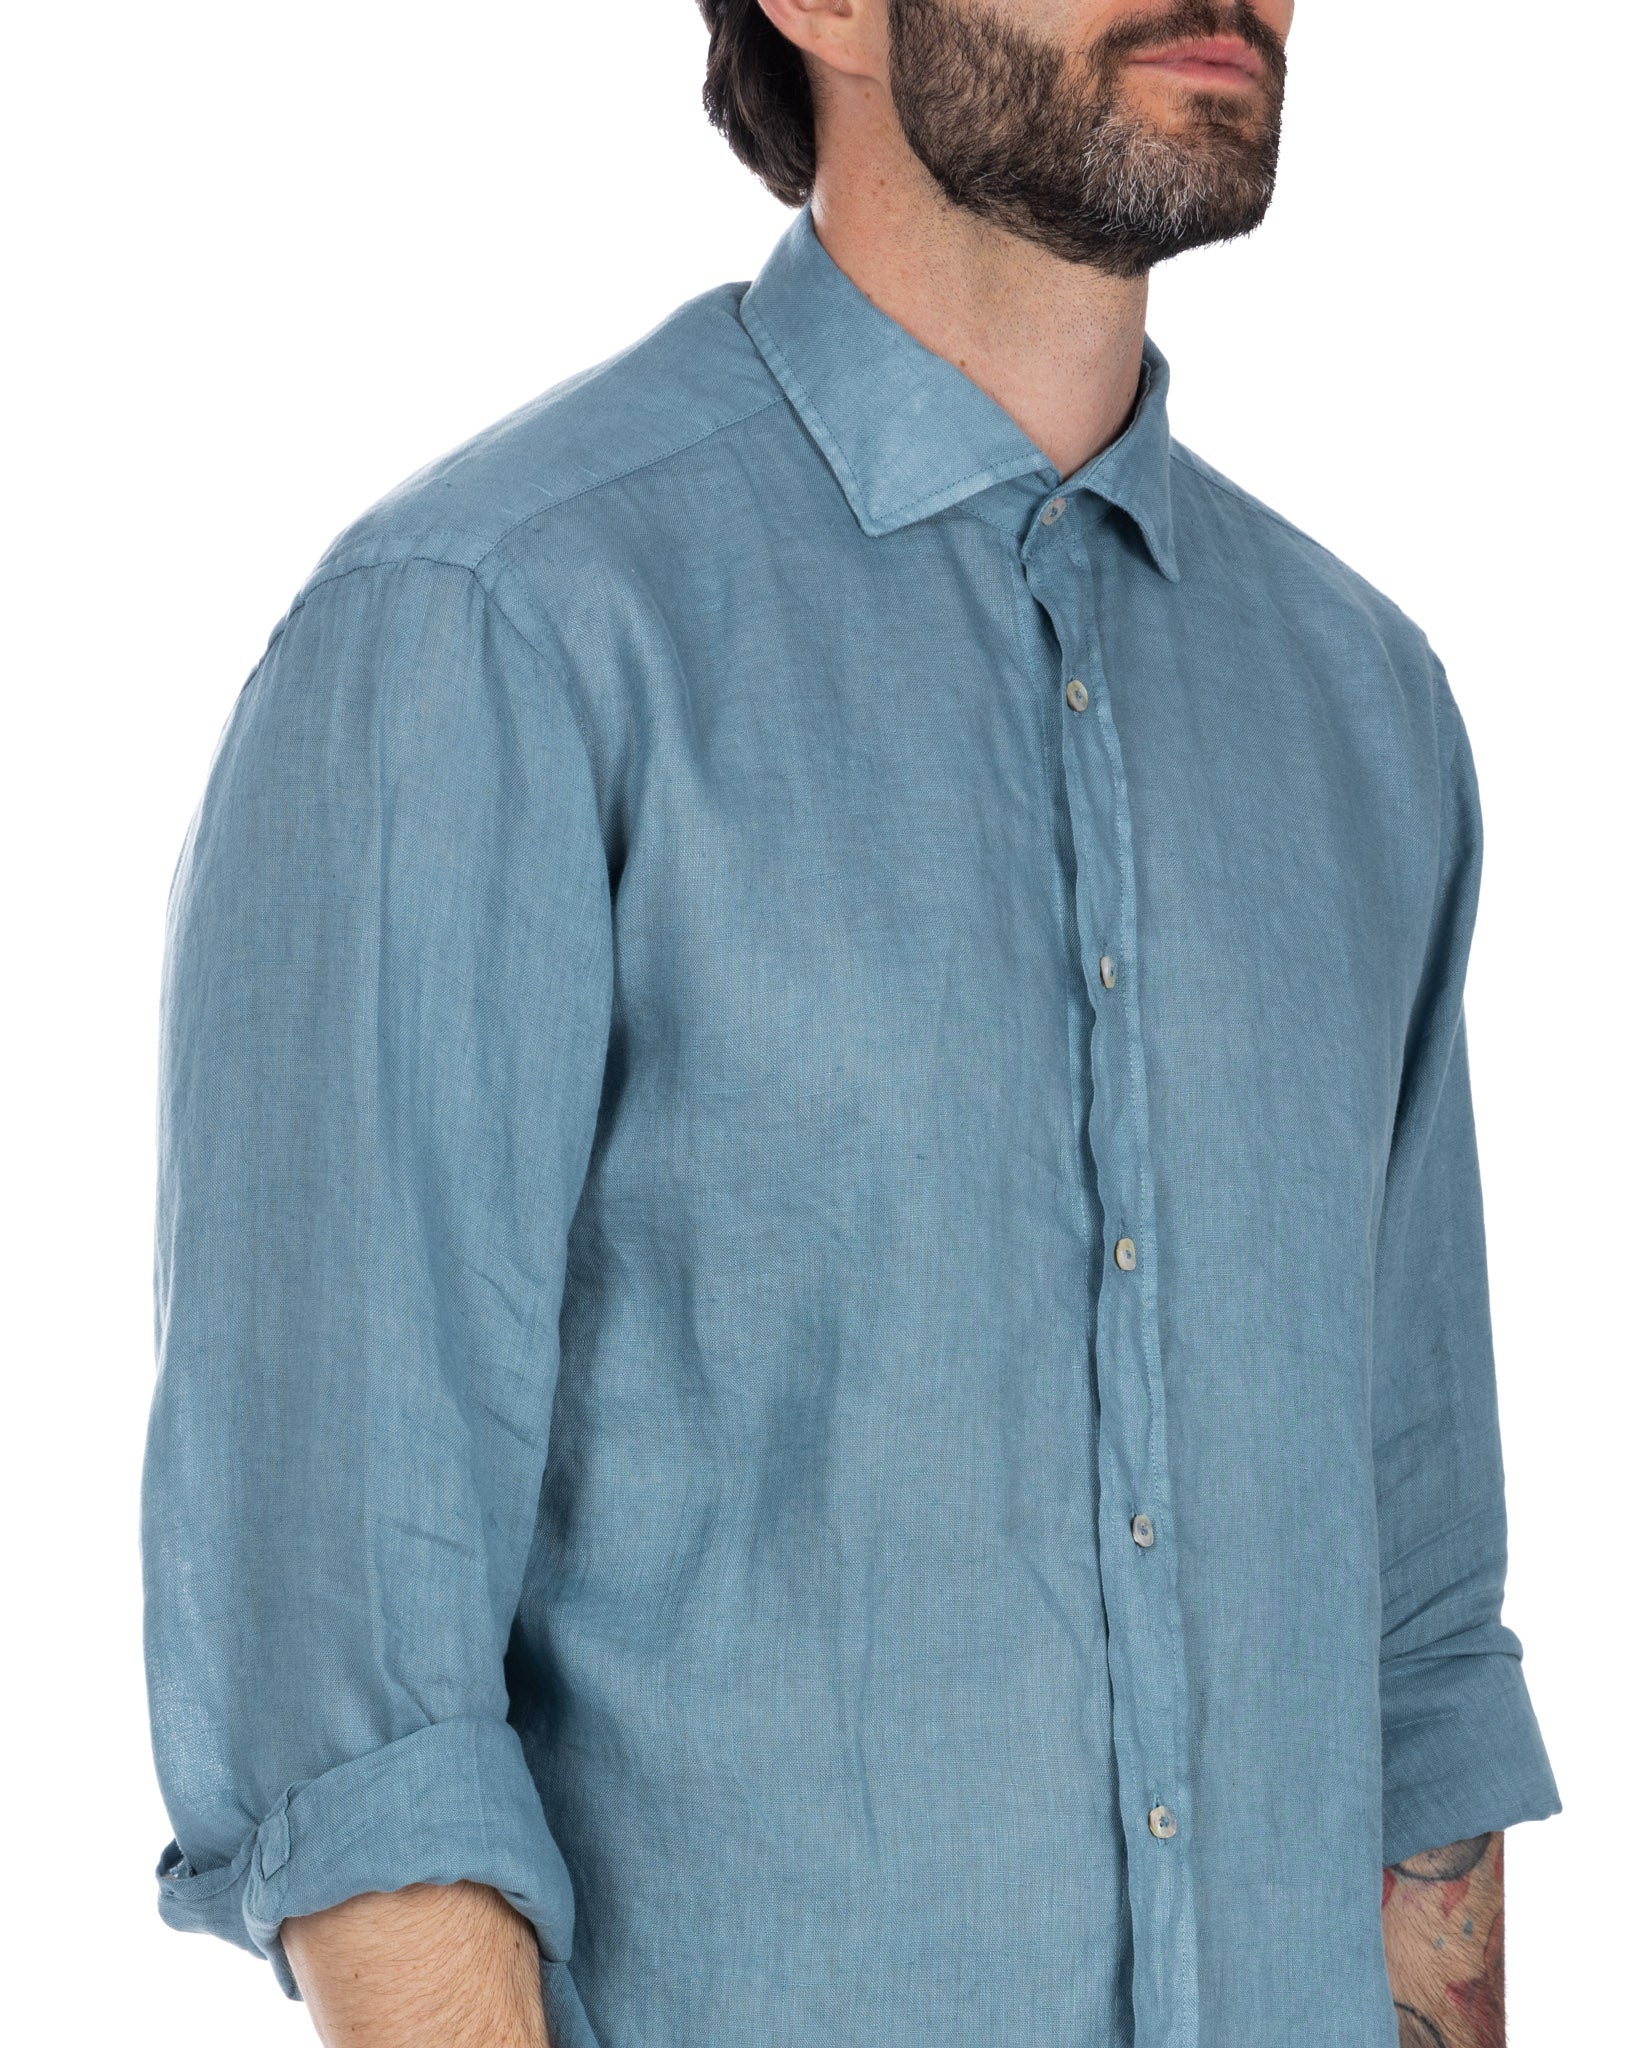 Montecarlo - pure teal linen shirt